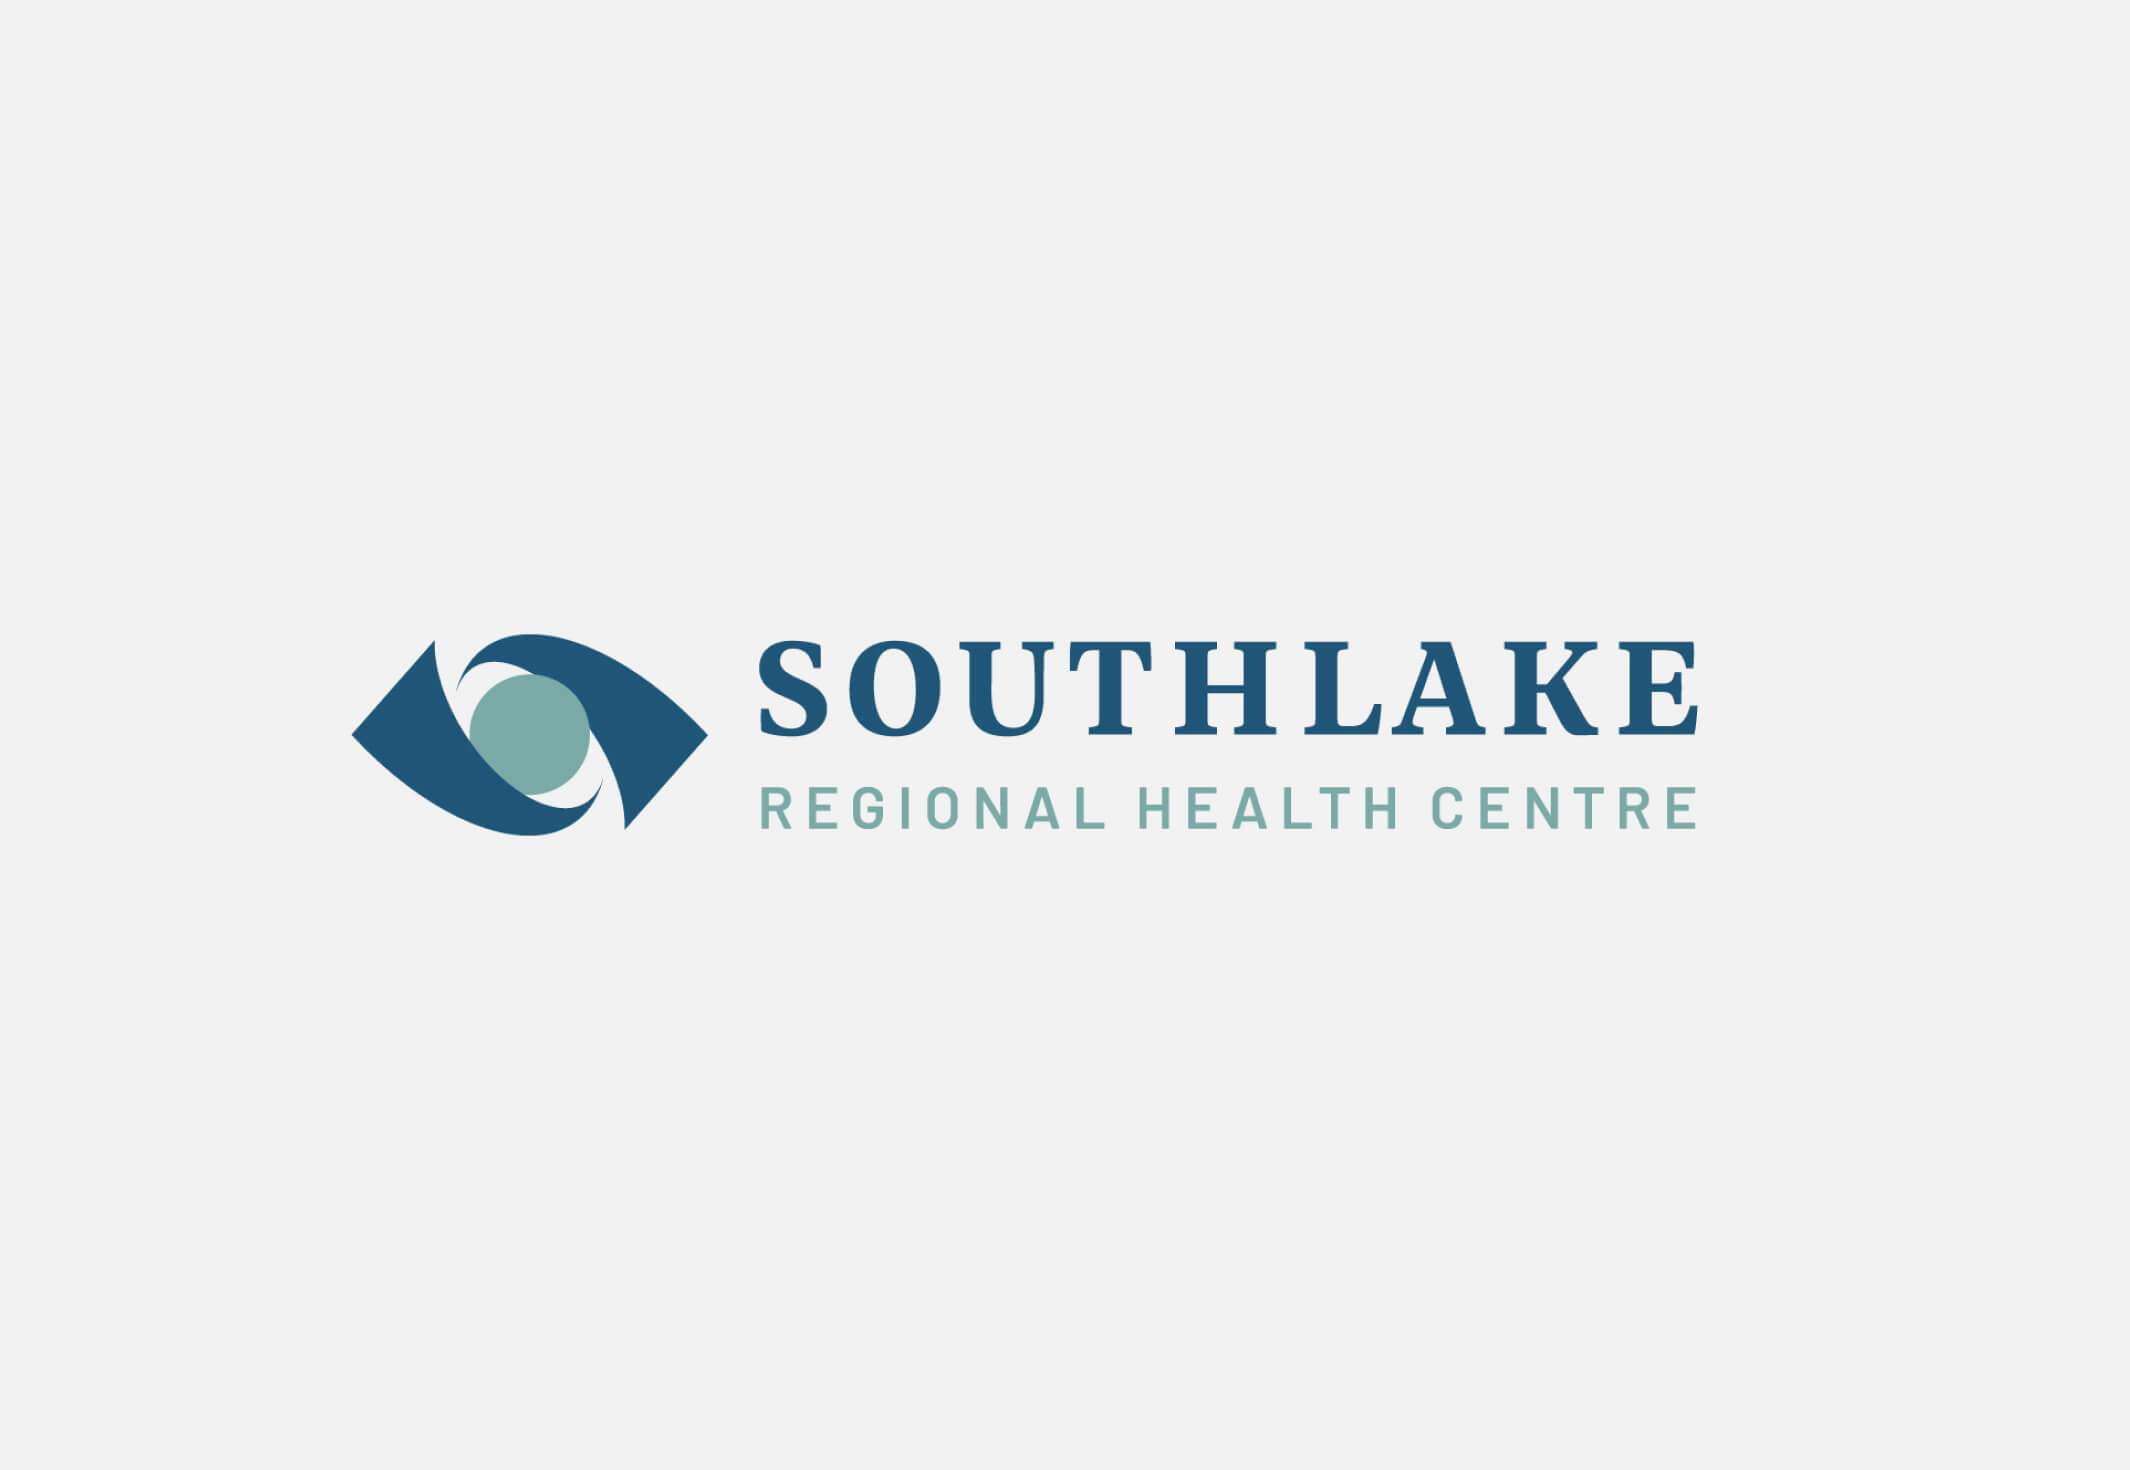 The new Southlake Regional Health Centre logo